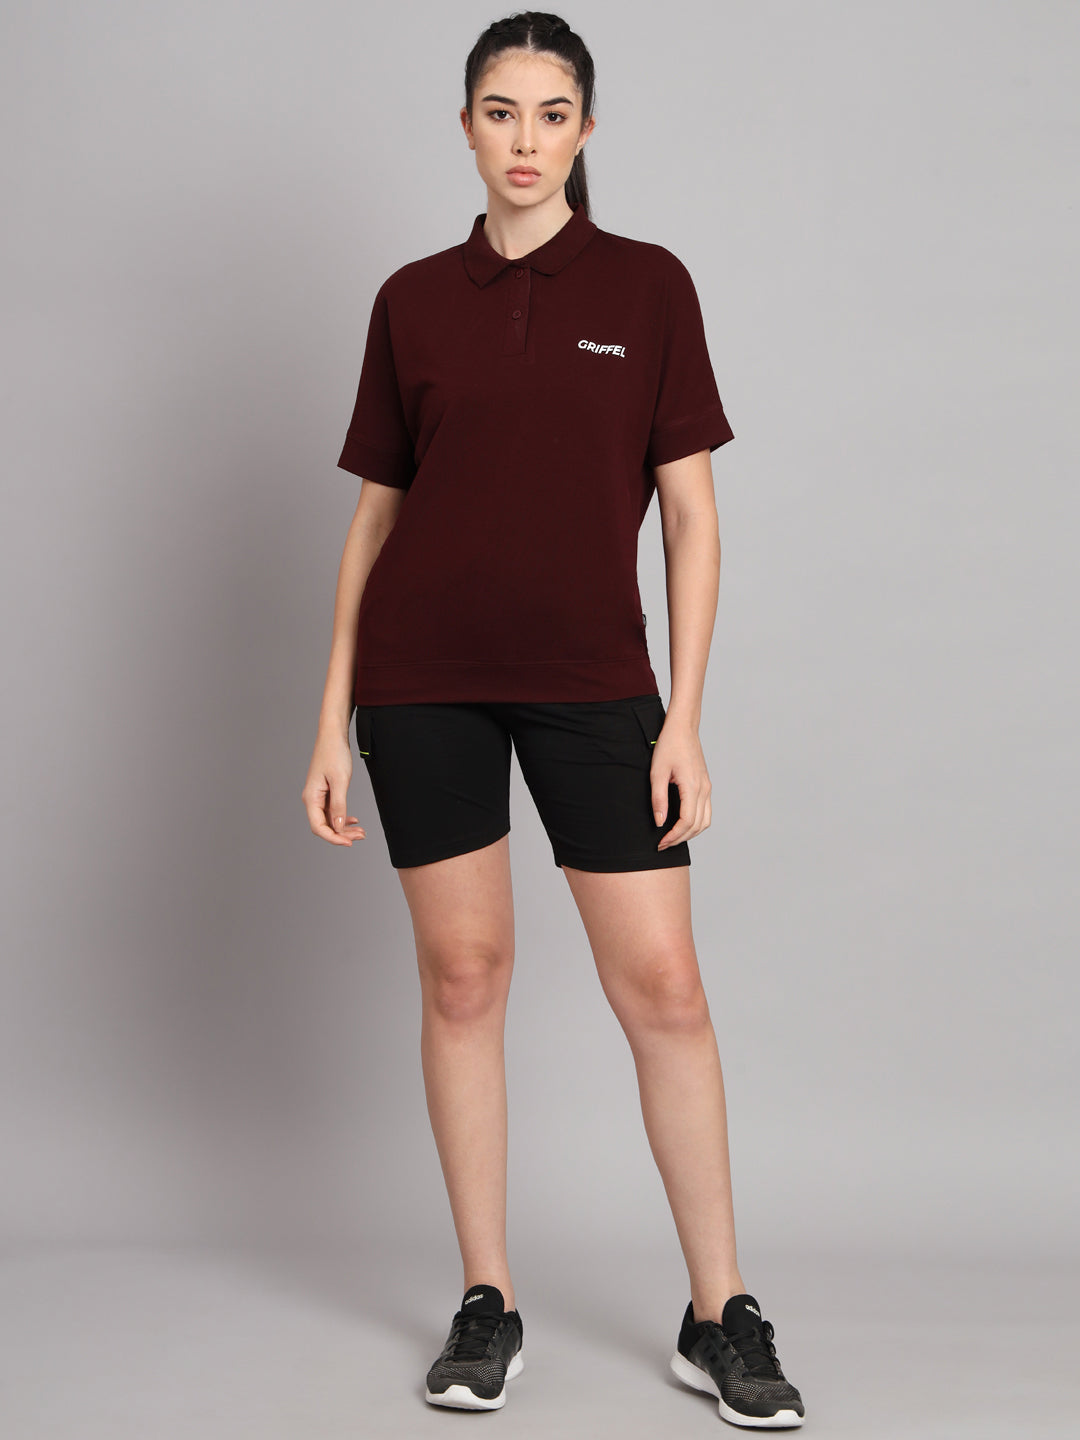 GRIFFEL Women Basic Solid Maroon Polo T-shirt - griffel